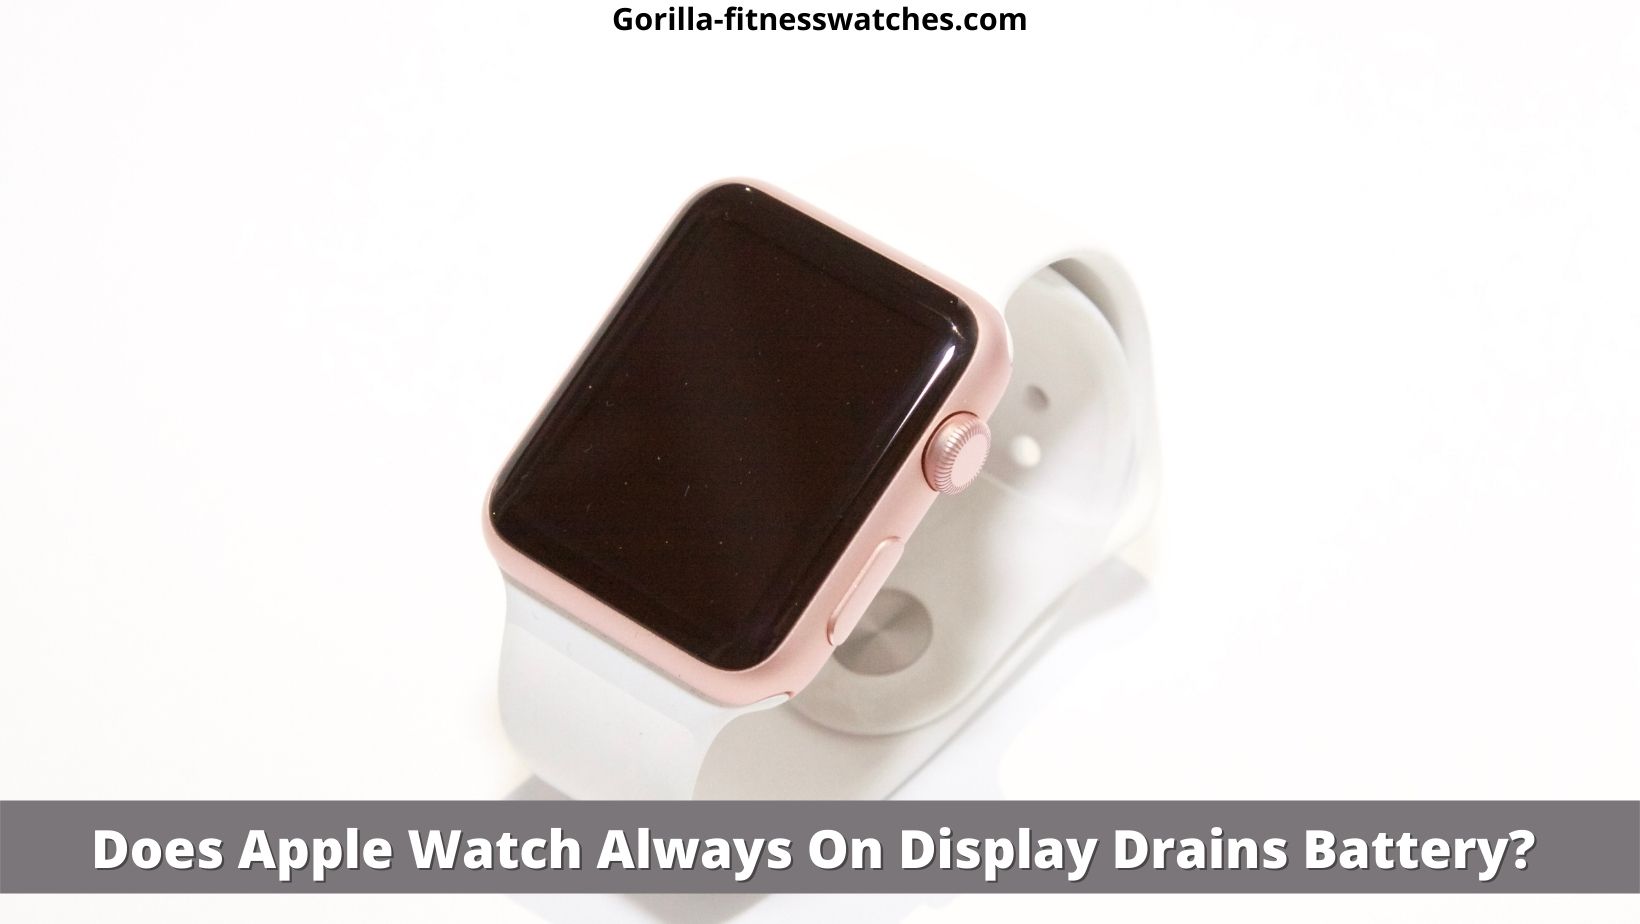 Apple Watch Always On Display Drains Battery?